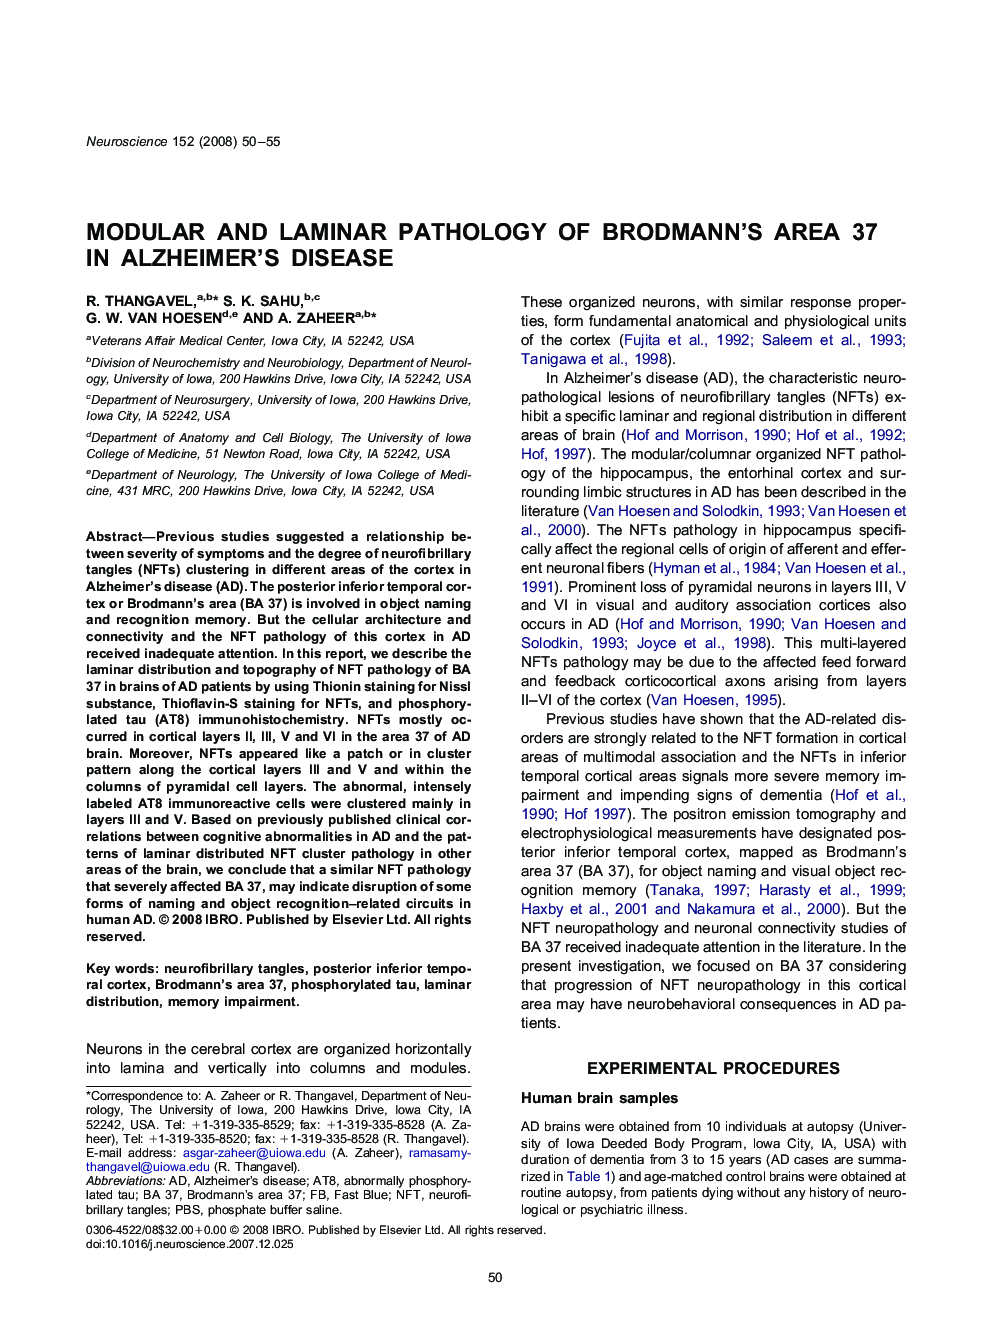 Modular and laminar pathology of Brodmann’s area 37 in Alzheimer’s disease